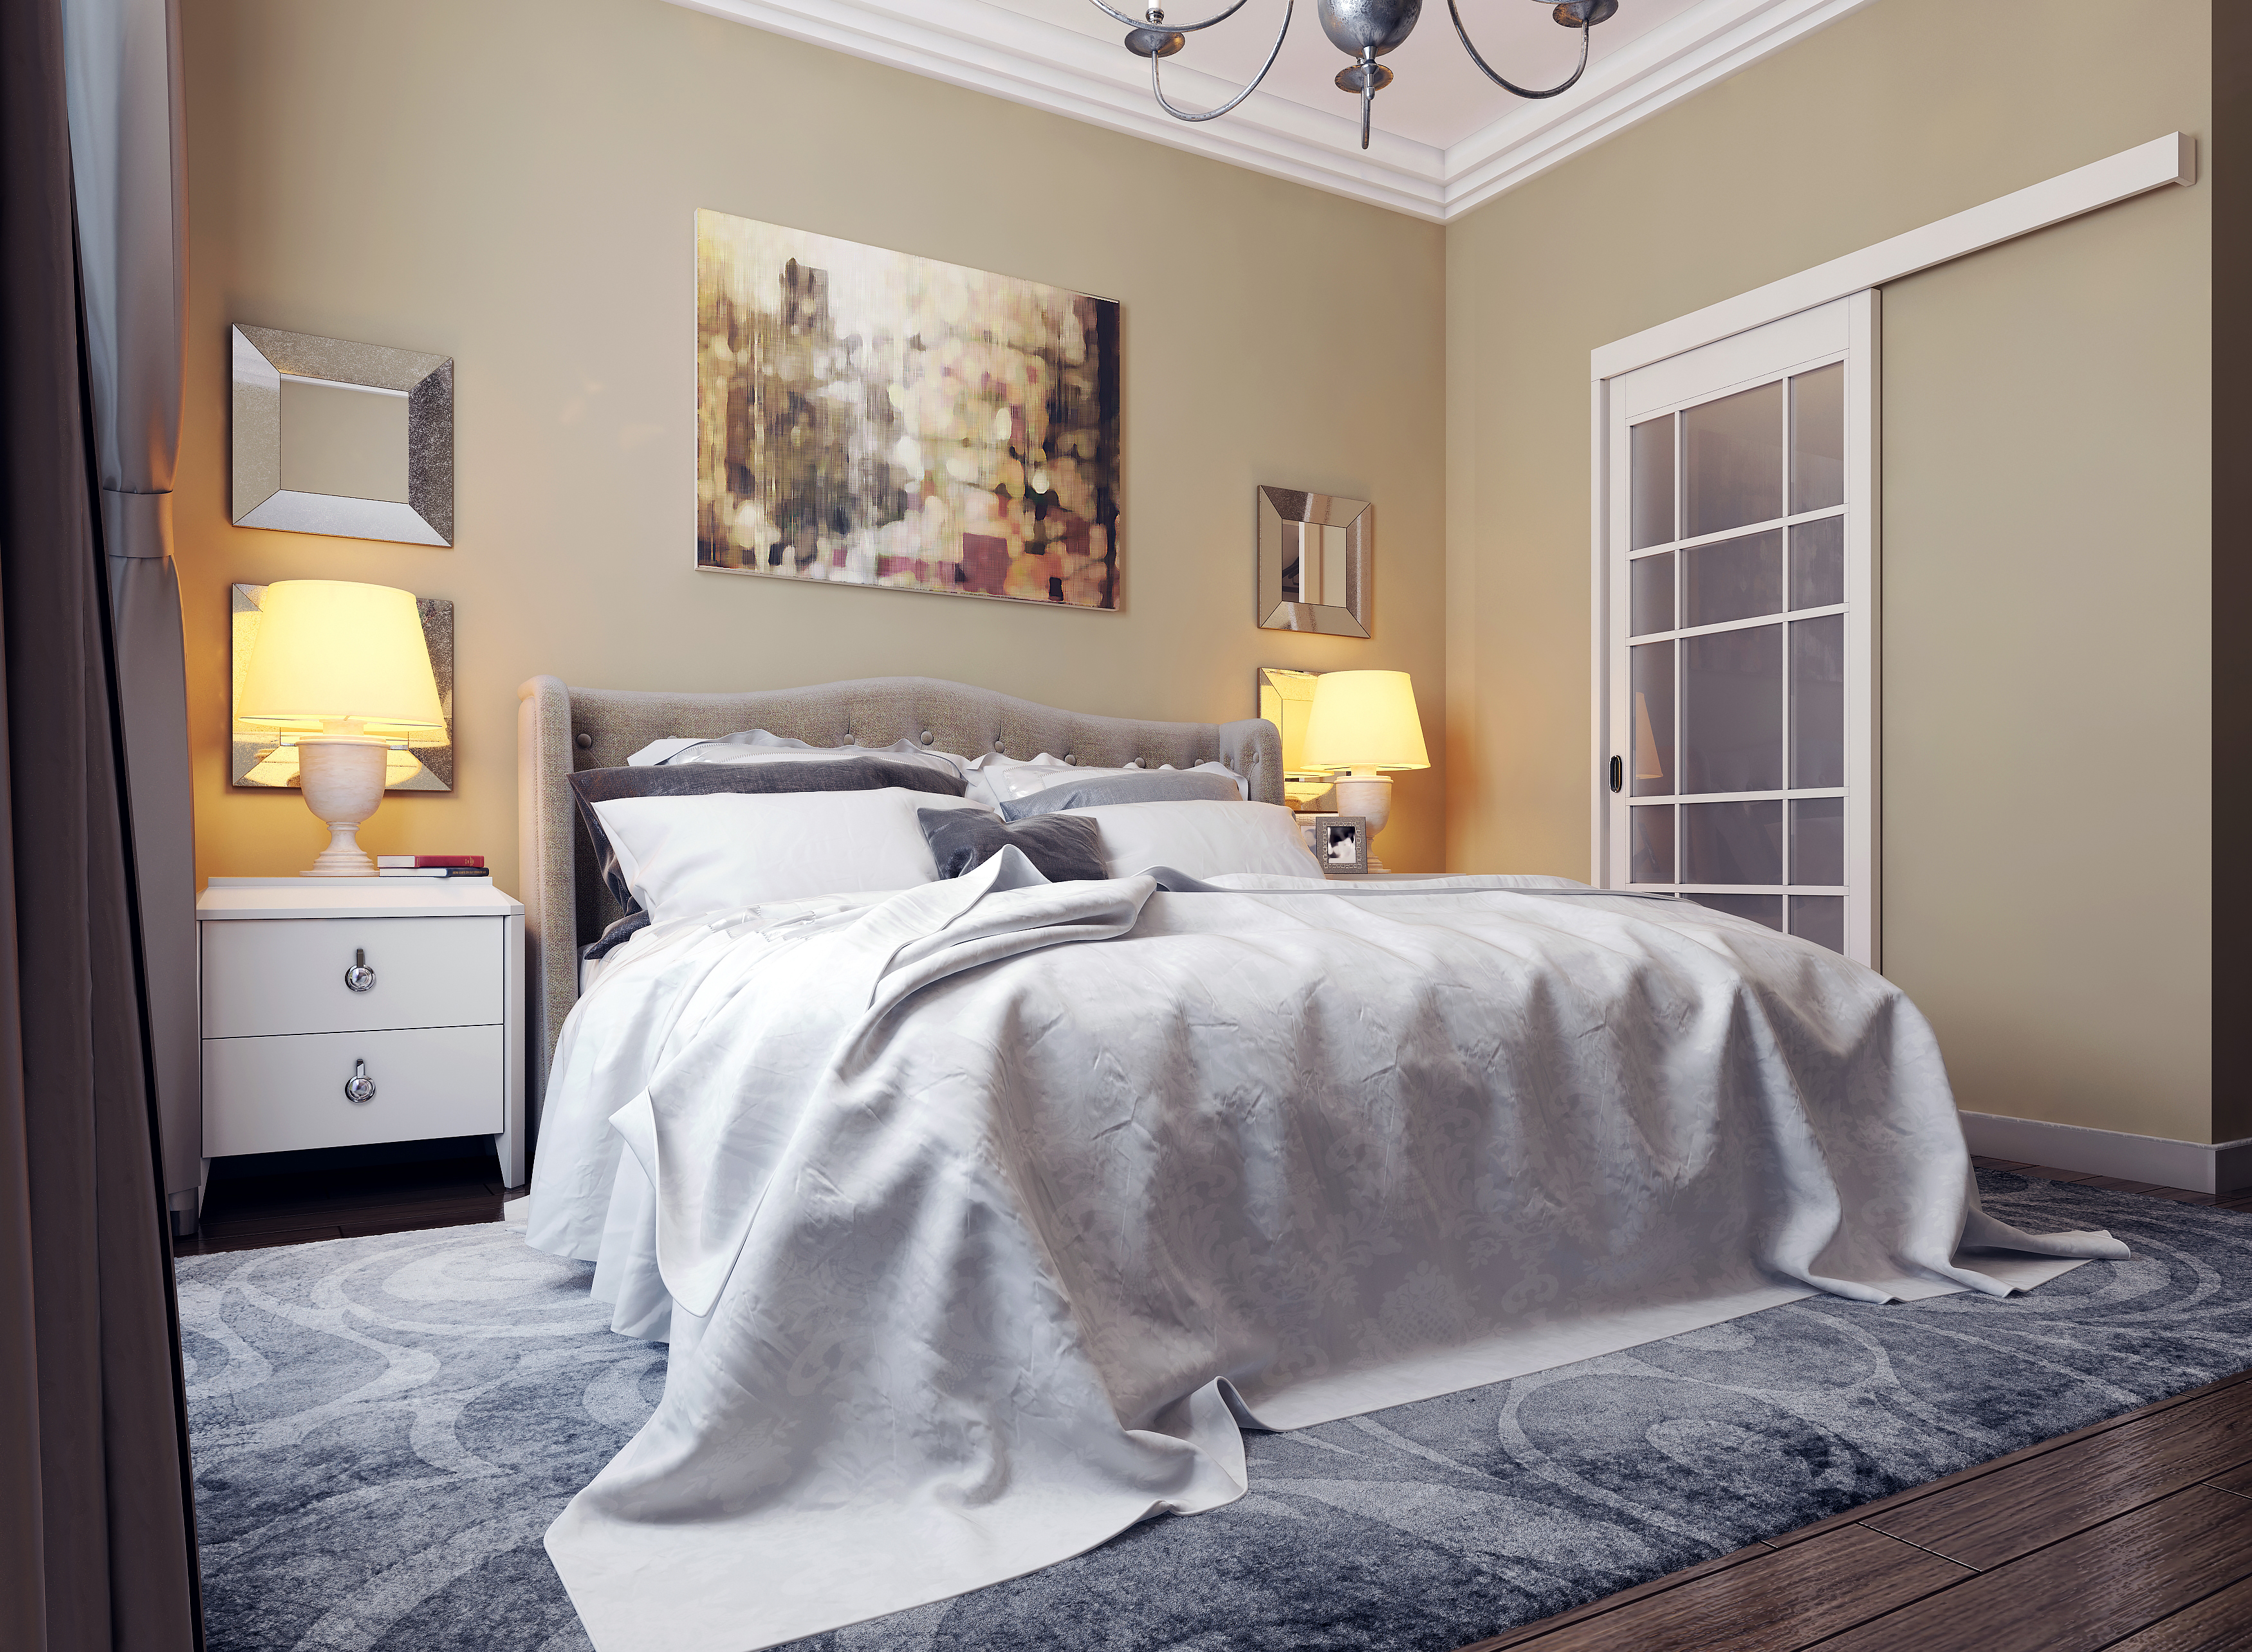 Amazing Bedroom Wall Decor Ideas Blog